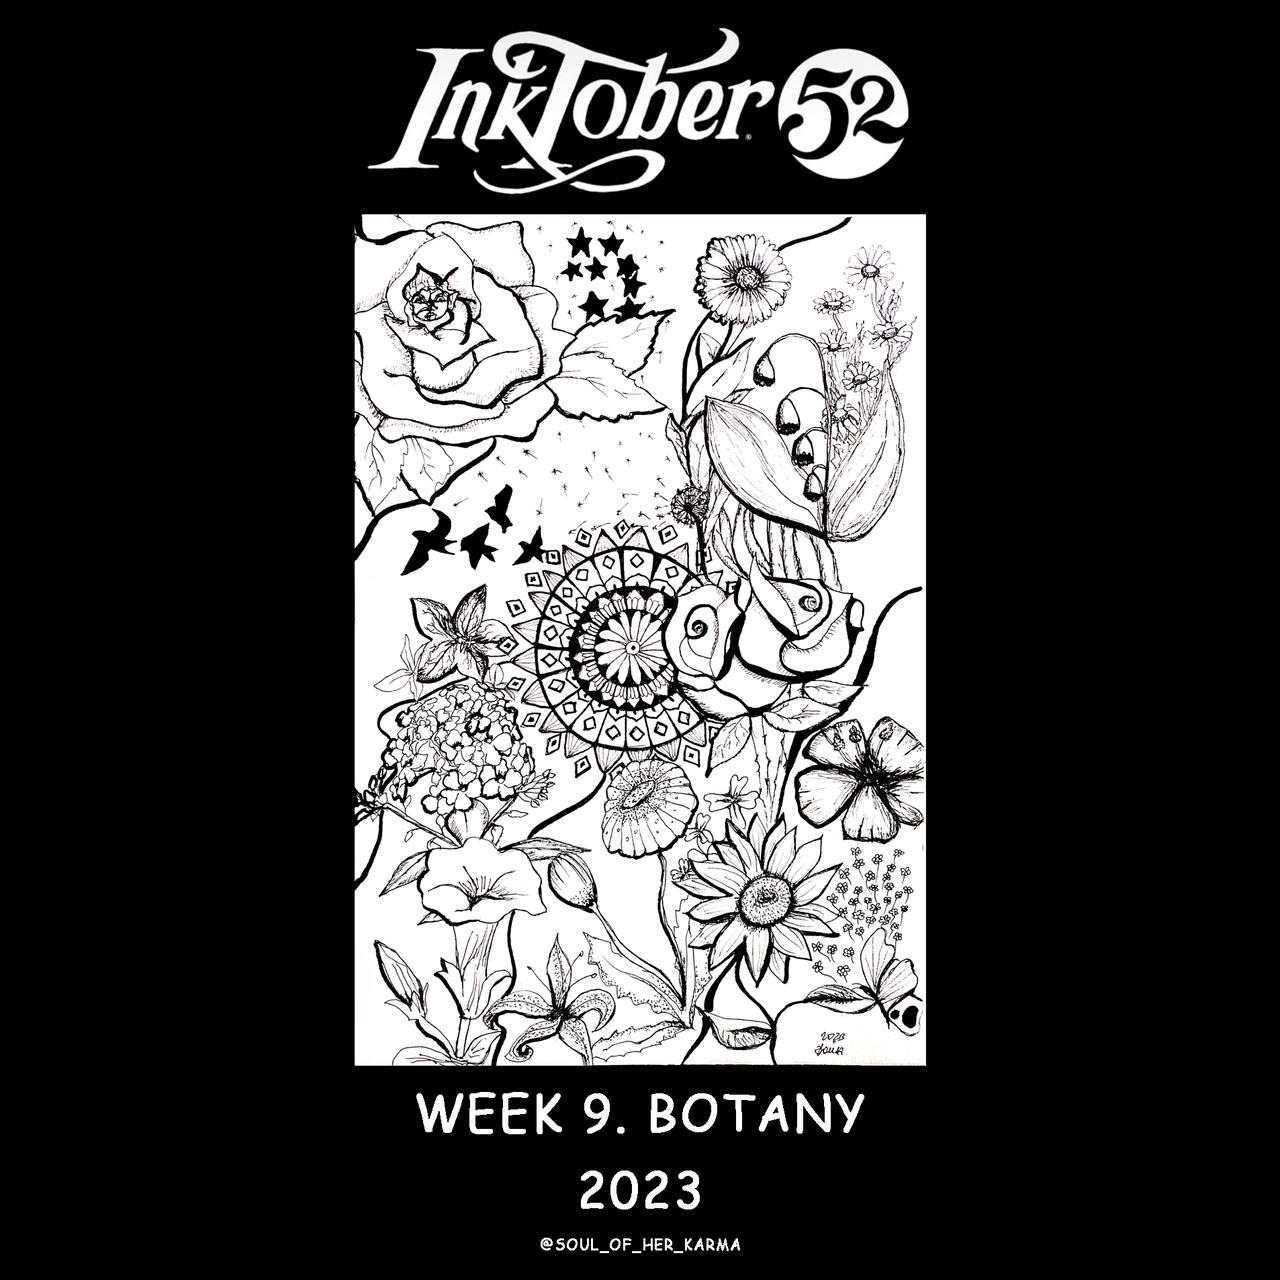 Inktober 52_week 9 BOTANY _ 2023 by SoulofHerKarma on DeviantArt